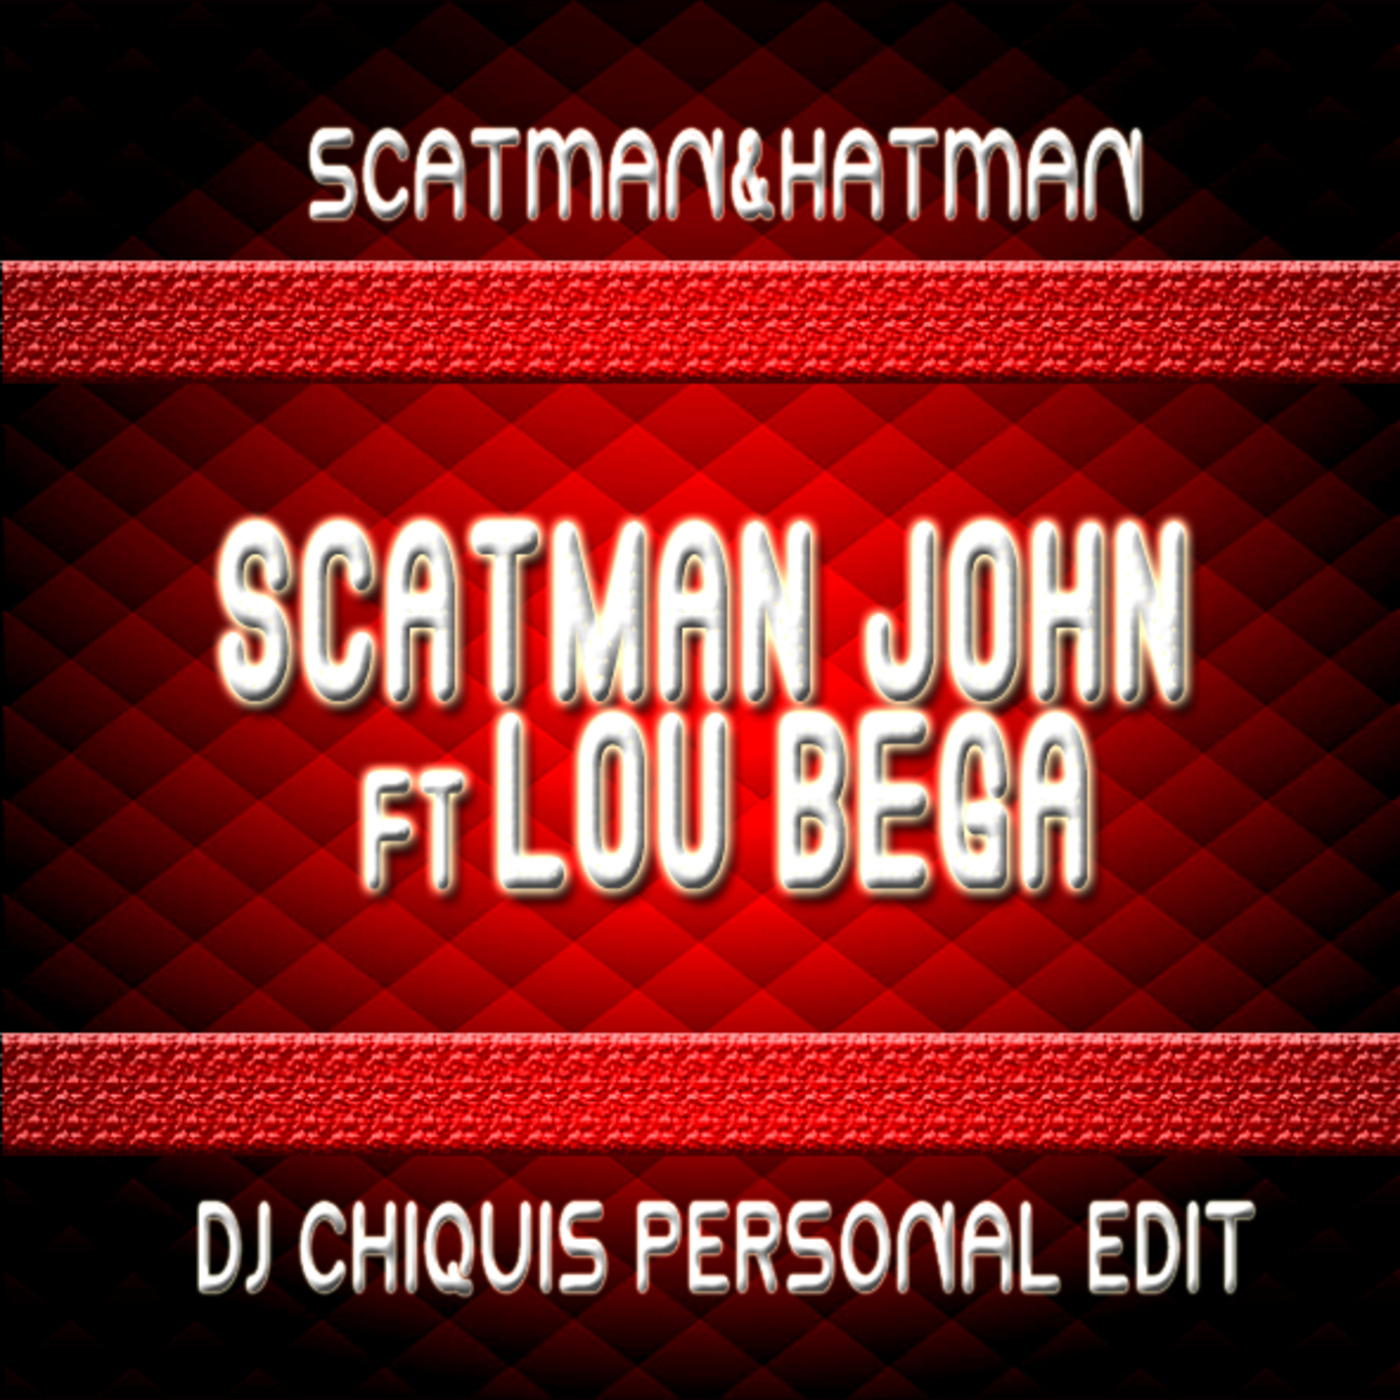 Scatman John Ft Lou Bega- scatman&hatman (DjChiquis Personal Edit)